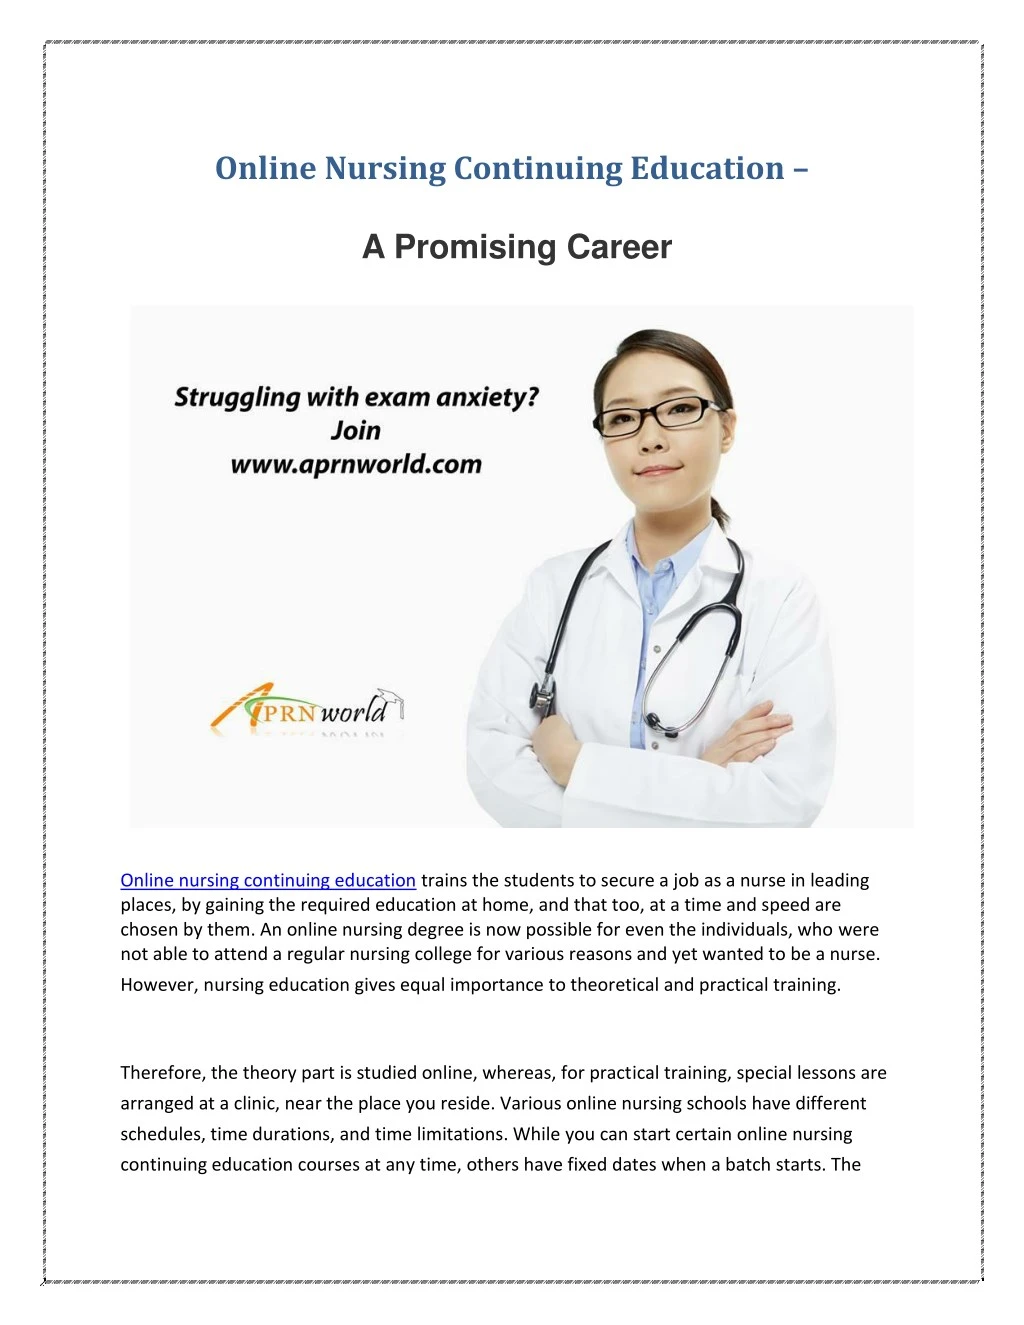 online nursing continuing education